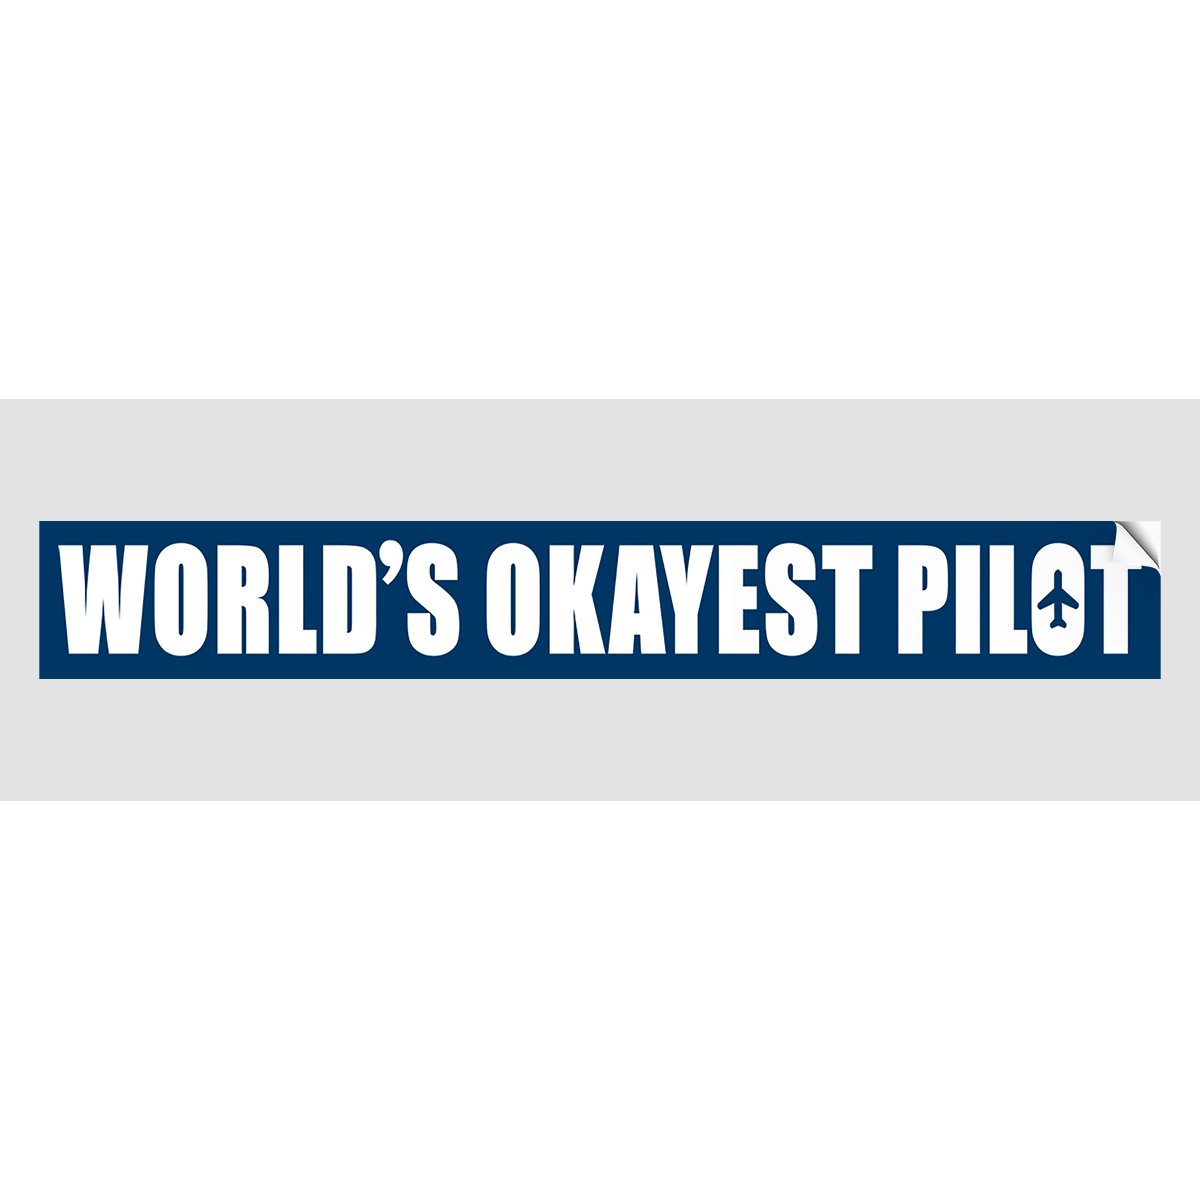 World's Okayest Pilot